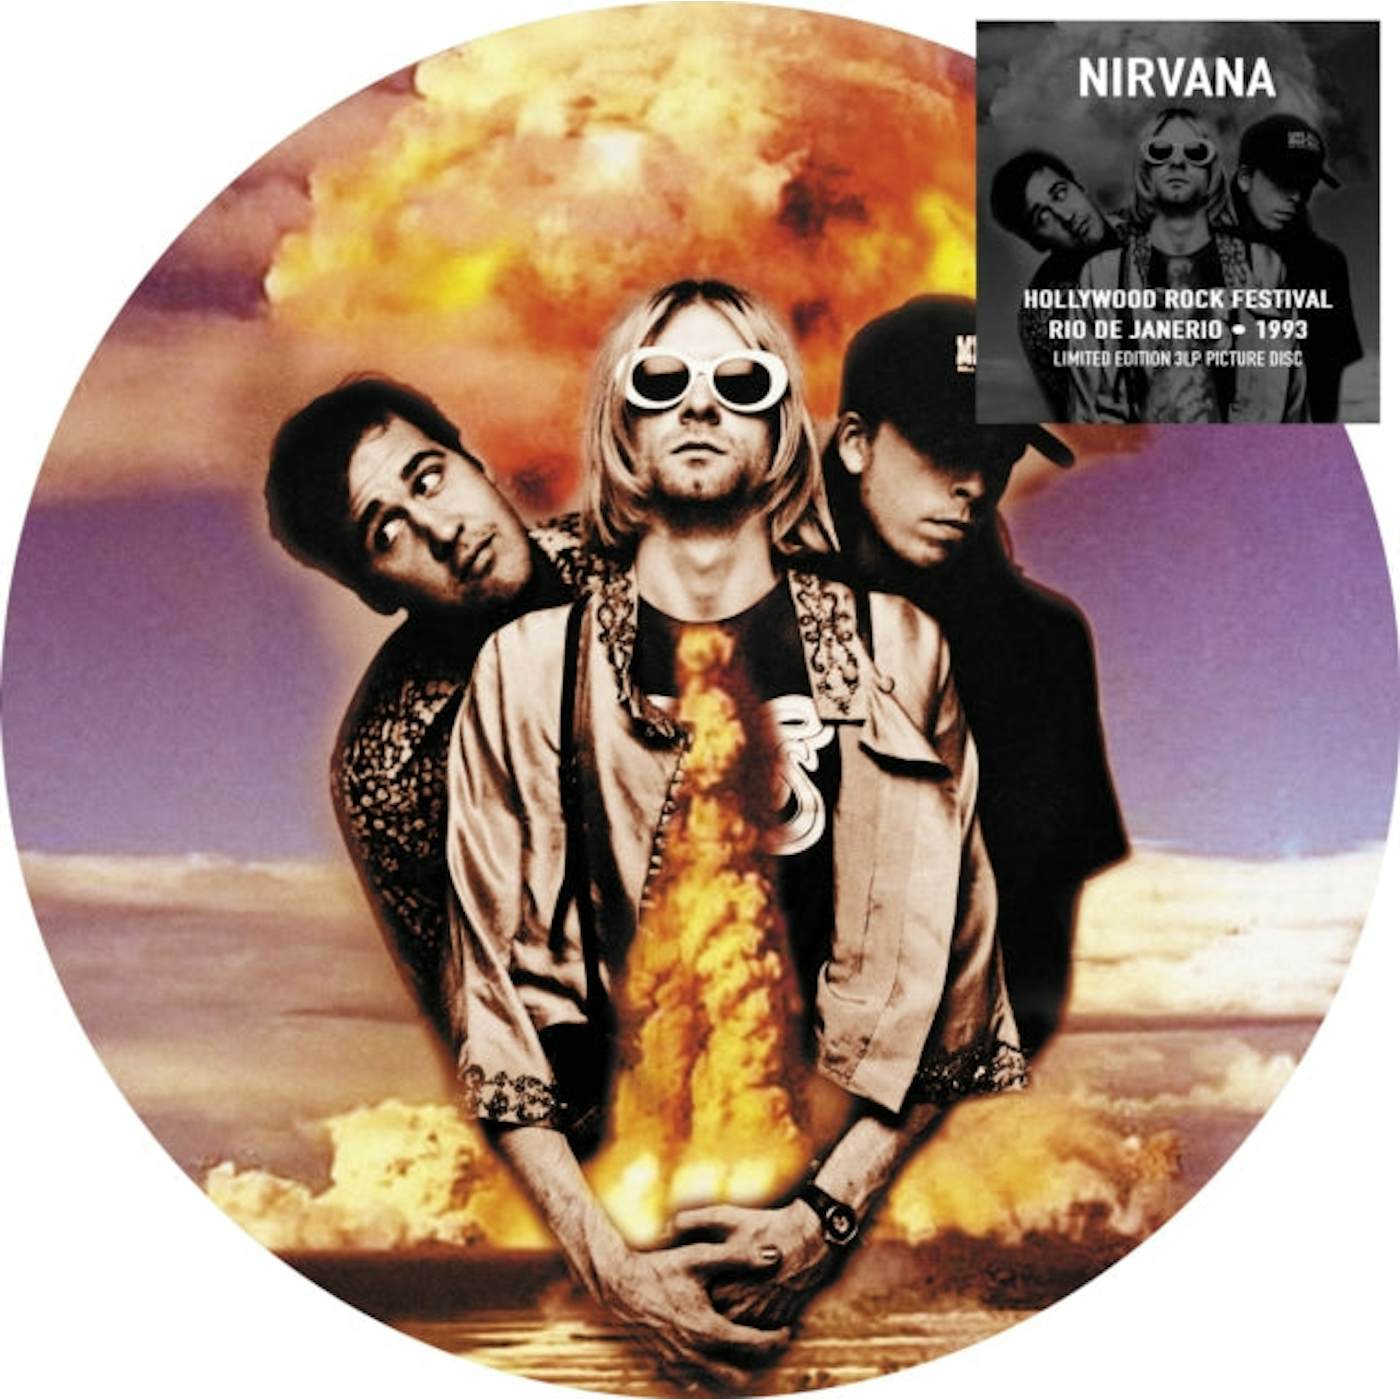 Nirvana LP Vinyl Record  Live Hollywood Rock Festival Rio 19 93 (Picture Disc)